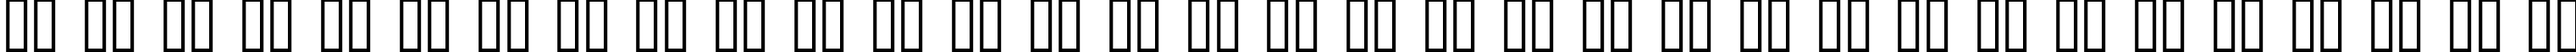 Пример написания русского алфавита шрифтом Journal SansSerif110b Bold